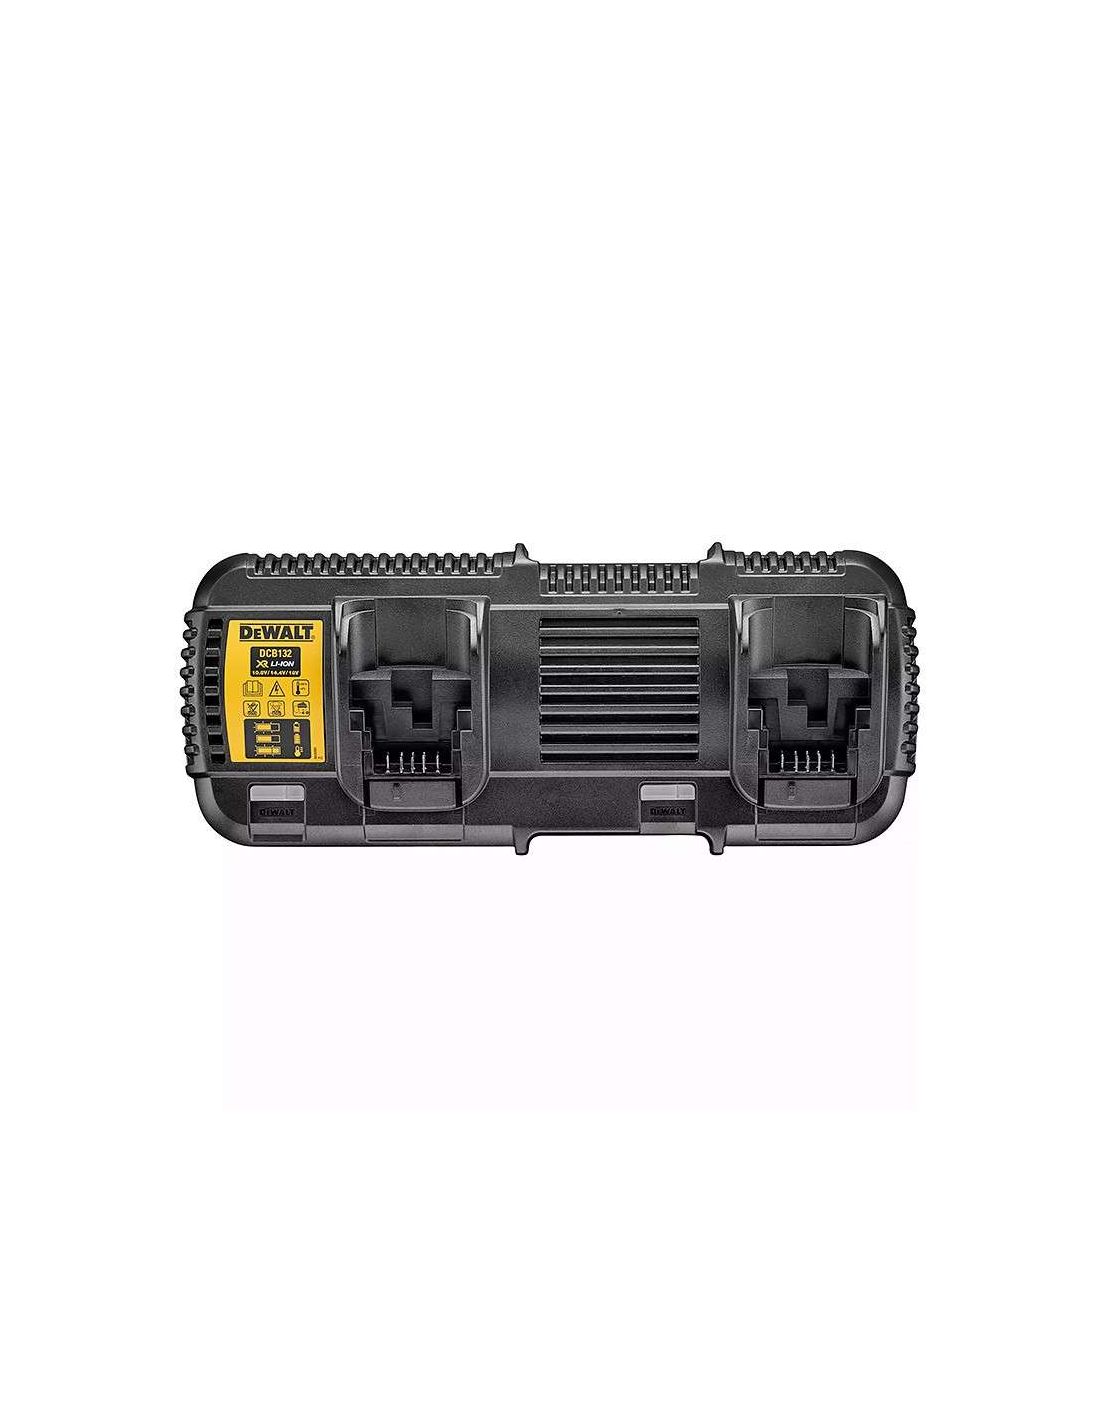 Pack de 2 batteries XR Flexvolt 18V/54V 9Ah/3Ah + chargeur rapide en boite  carton DEWALT DCB118X2-QW - DEWALT - DCB118X2-QW